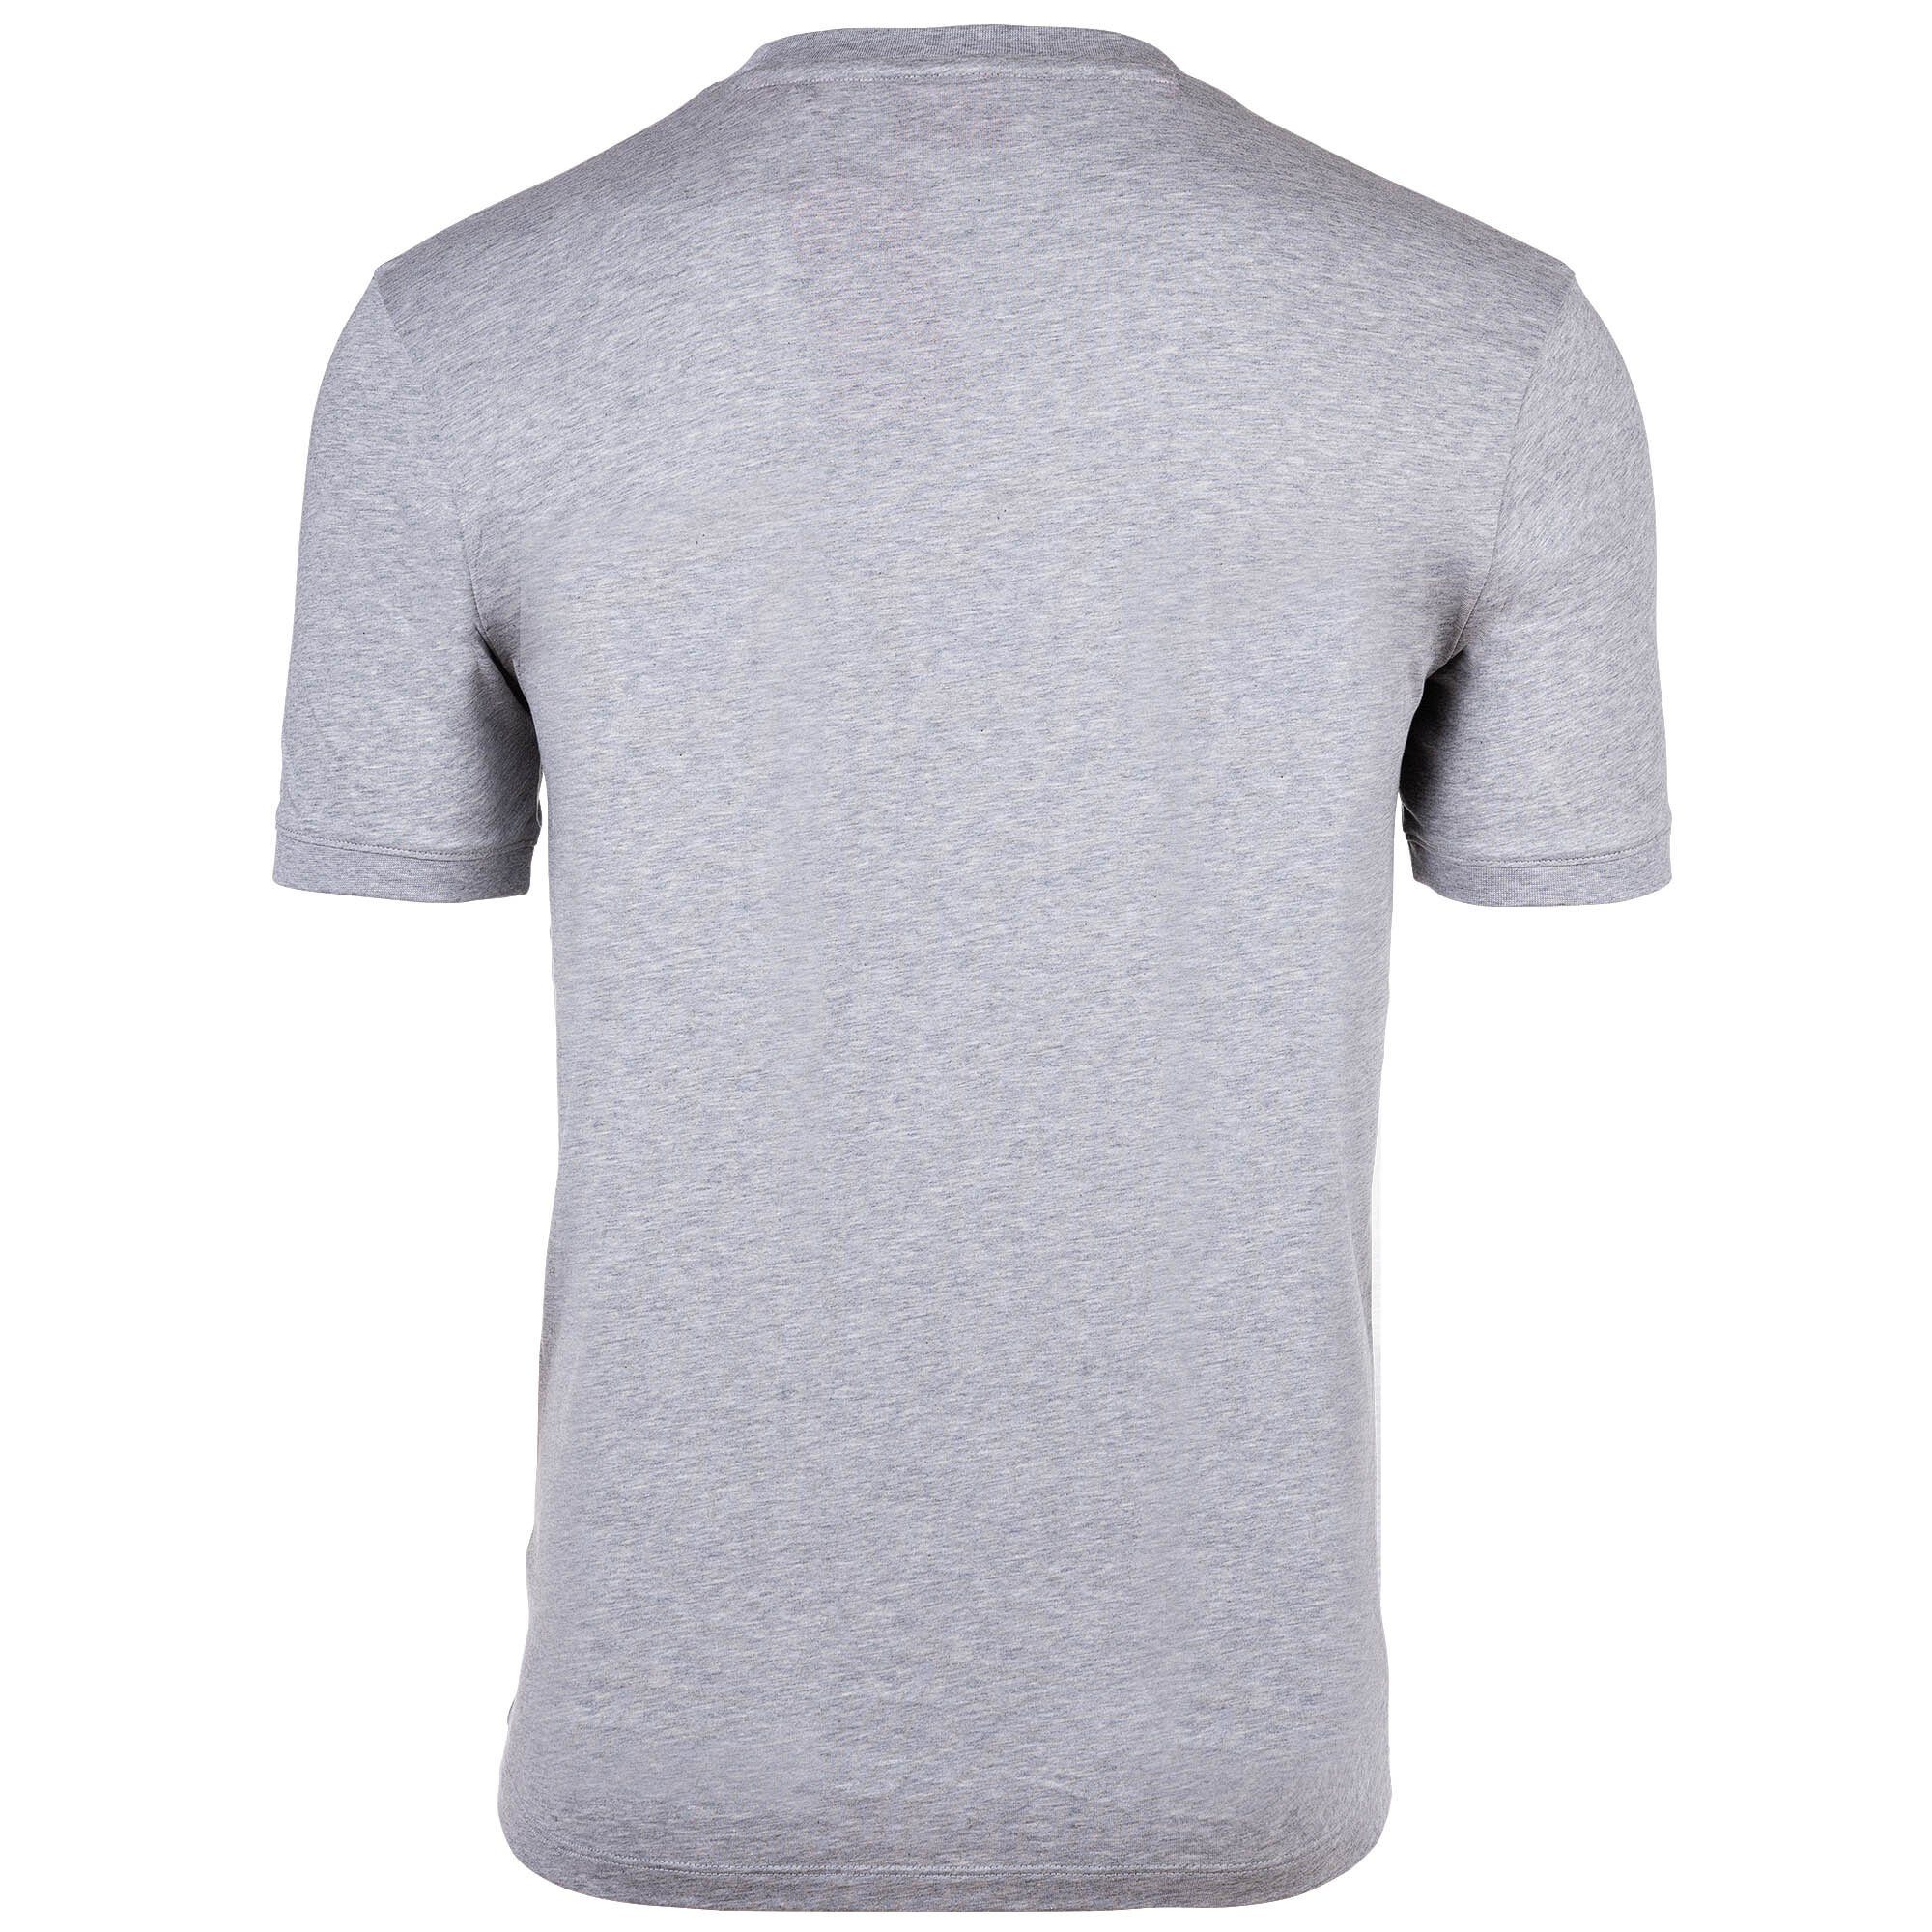 - Grey) Grau Rundhals HUGO T-Shirt T-Shirt Herren (Open Diragolino212